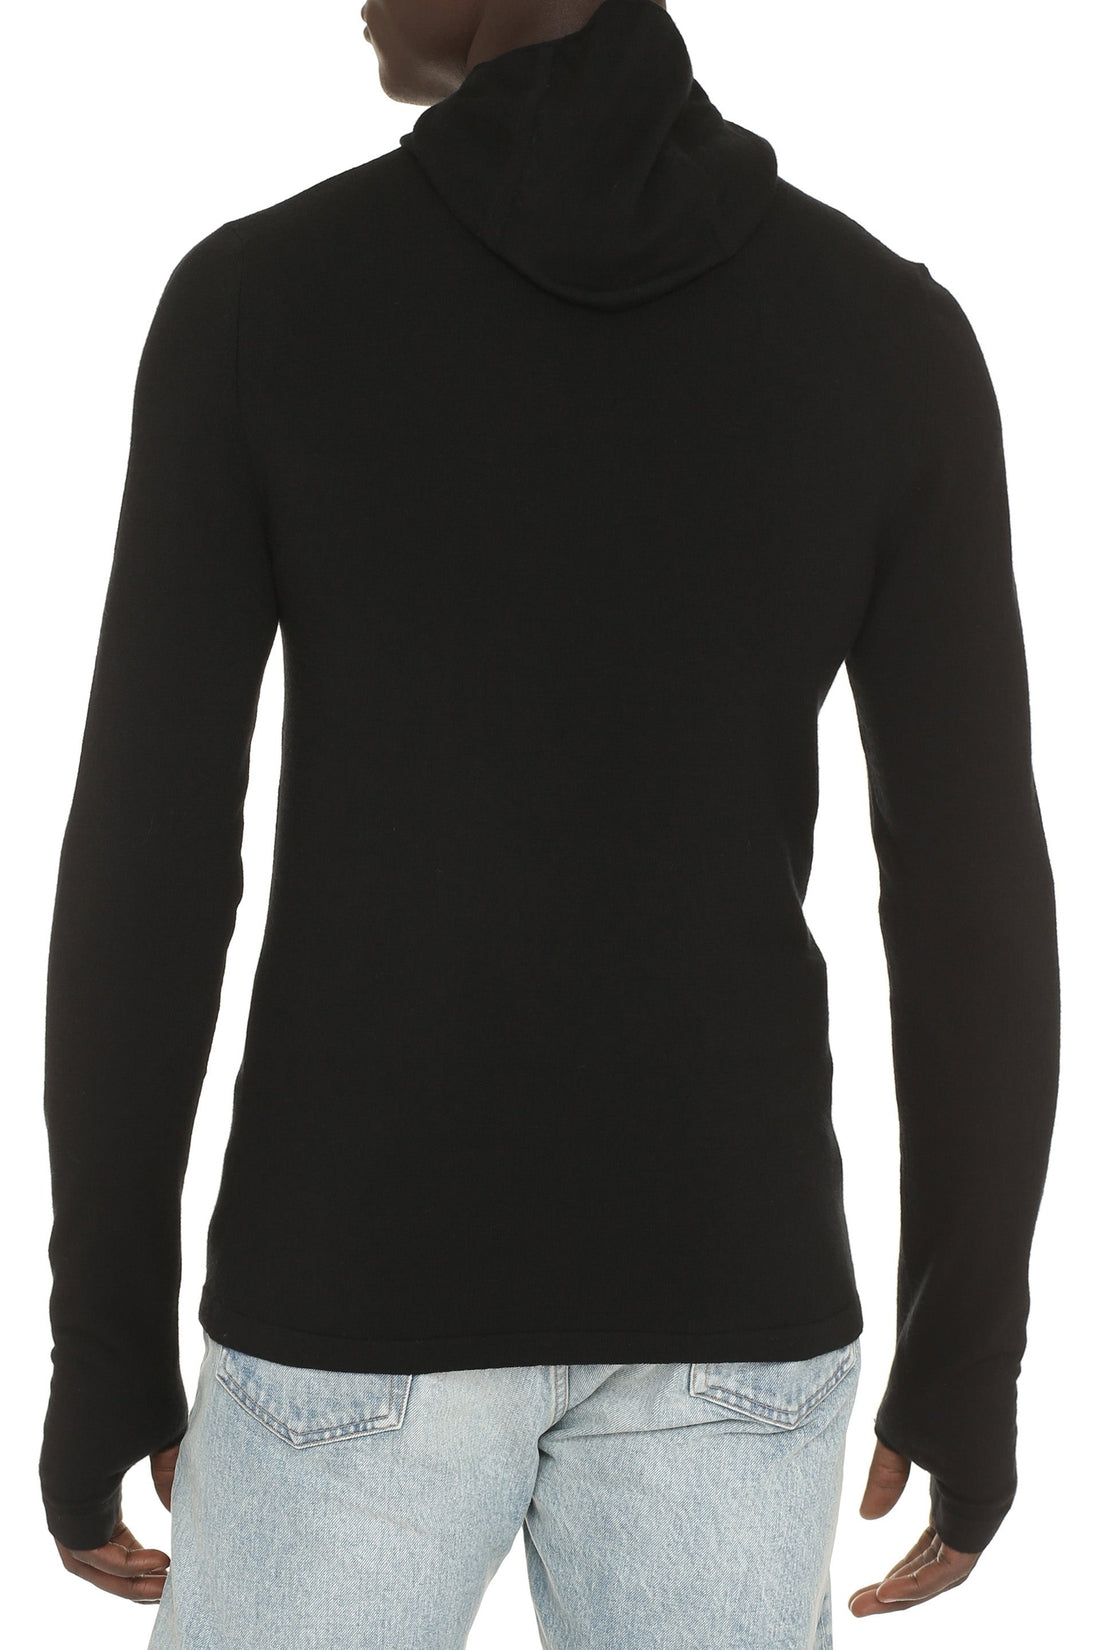 Bottega Veneta-OUTLET-SALE-Cashmere sweater-ARCHIVIST